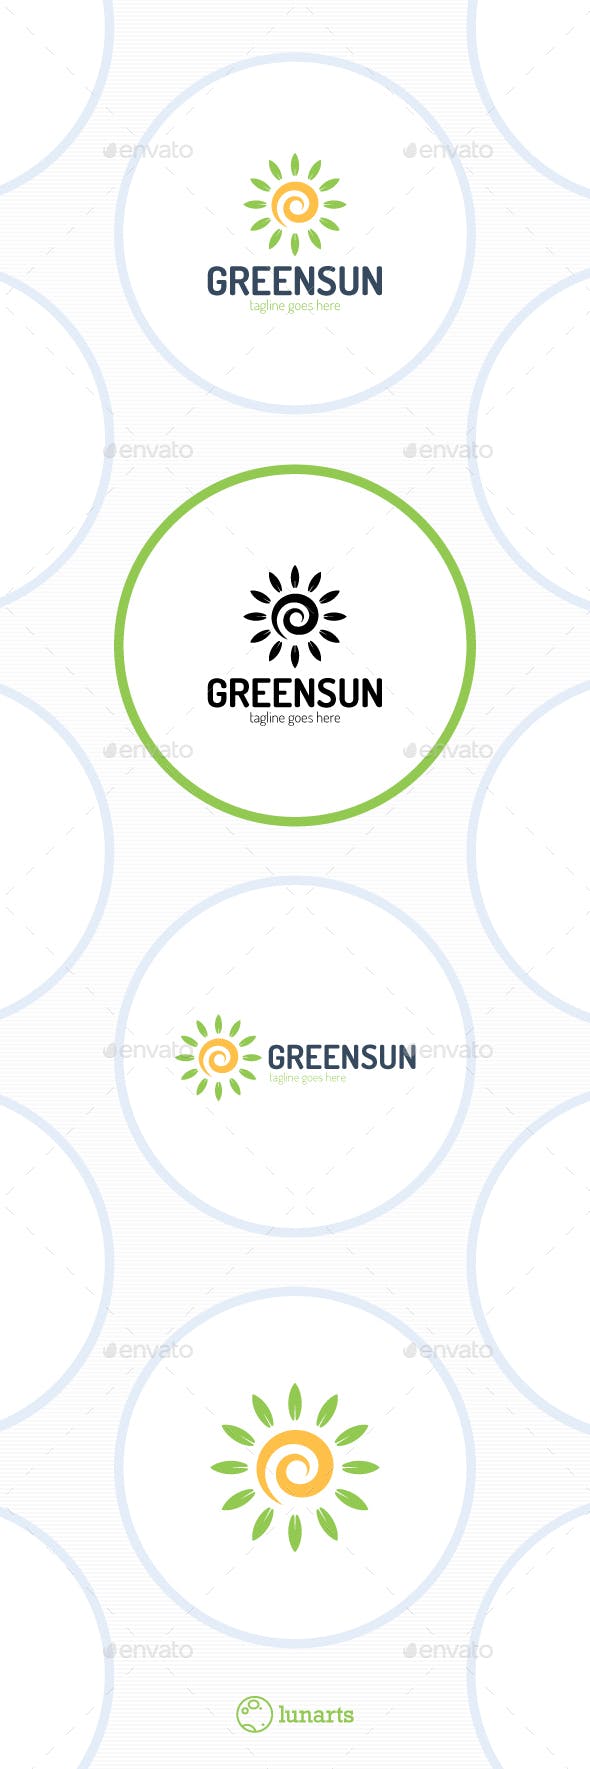 Green Spiral Logo - Green Spiral Sun Logo by lunarts_studio | GraphicRiver